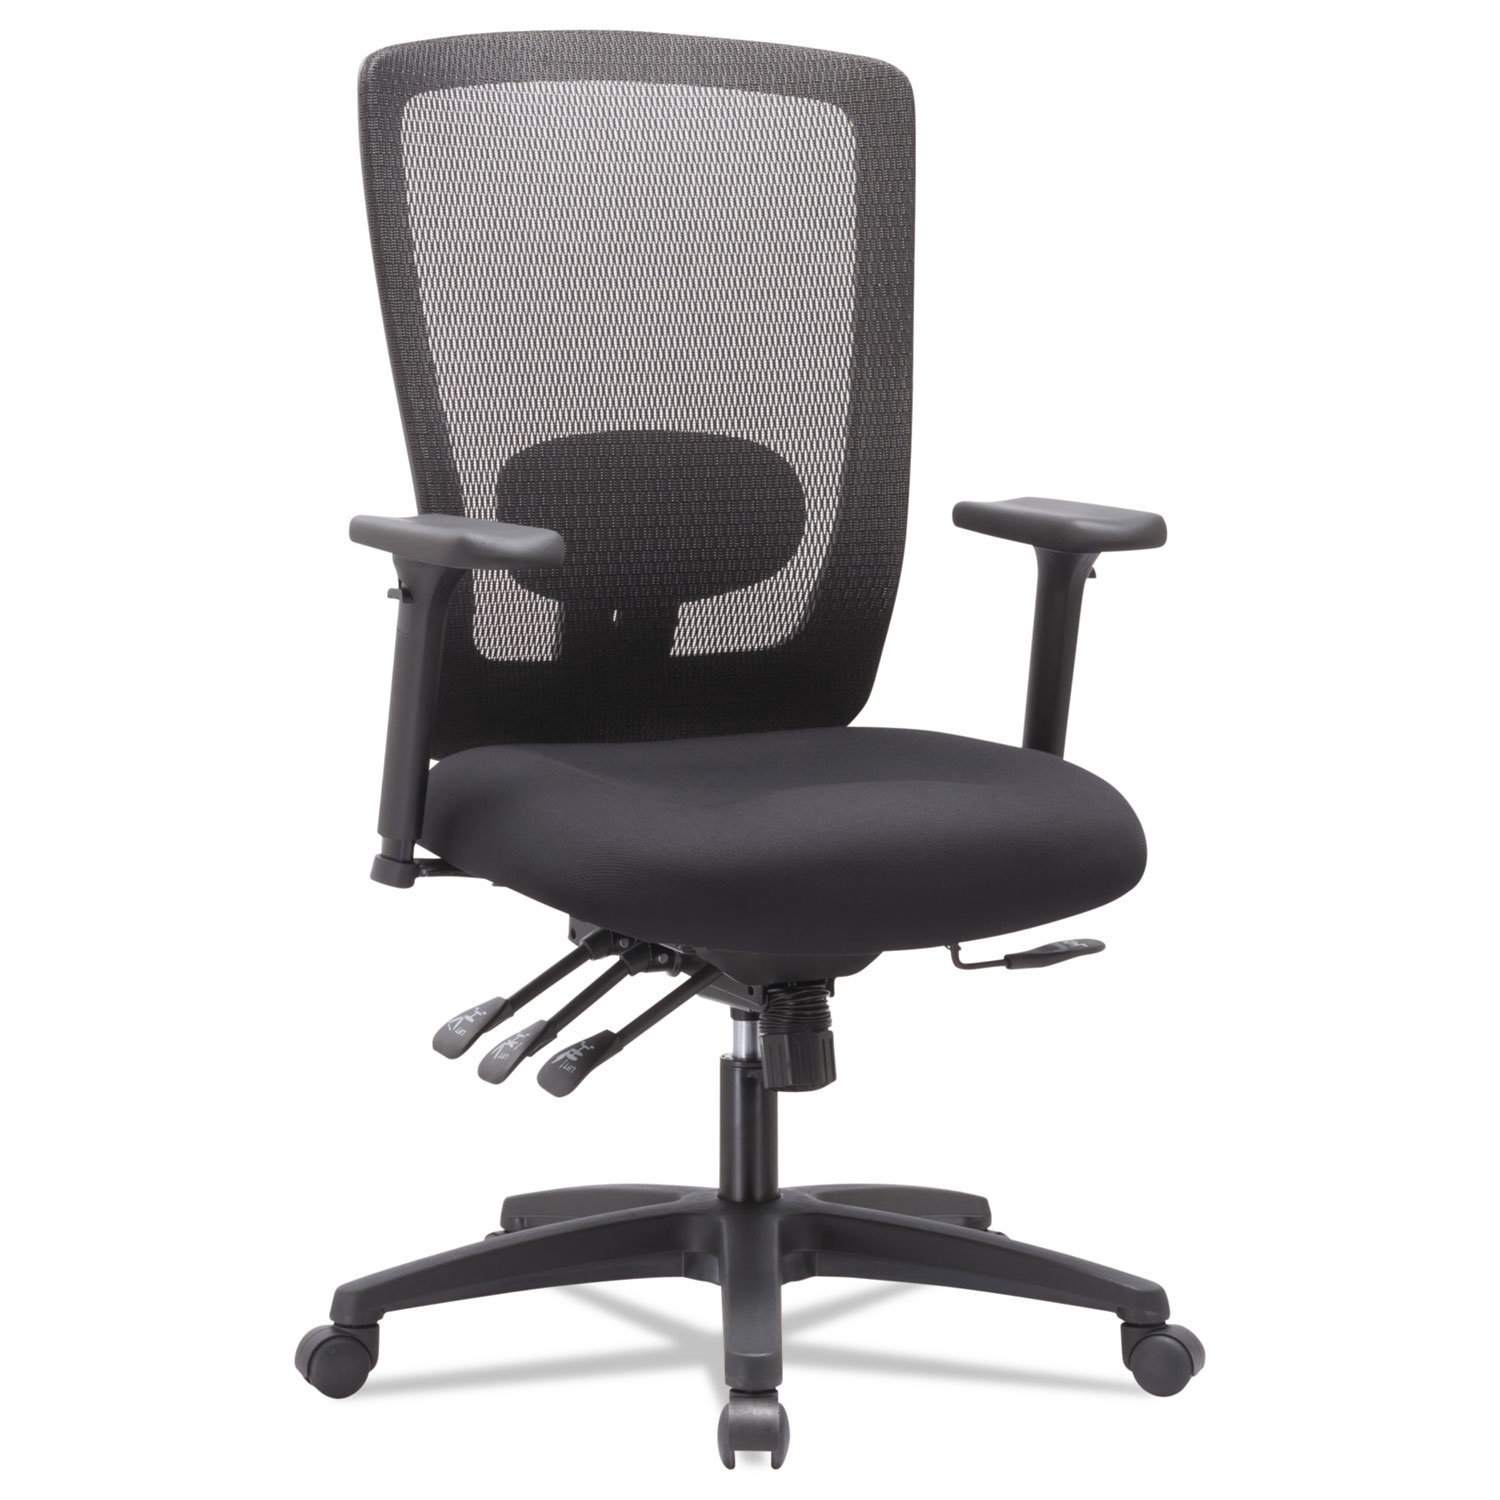  Alera ALENV41M14 Alera Envy Series Mesh High-Back Multifunction Chair, Supports up to 250 lbs., Black Seat/Black Back, Black Base (ALENV41M14) 